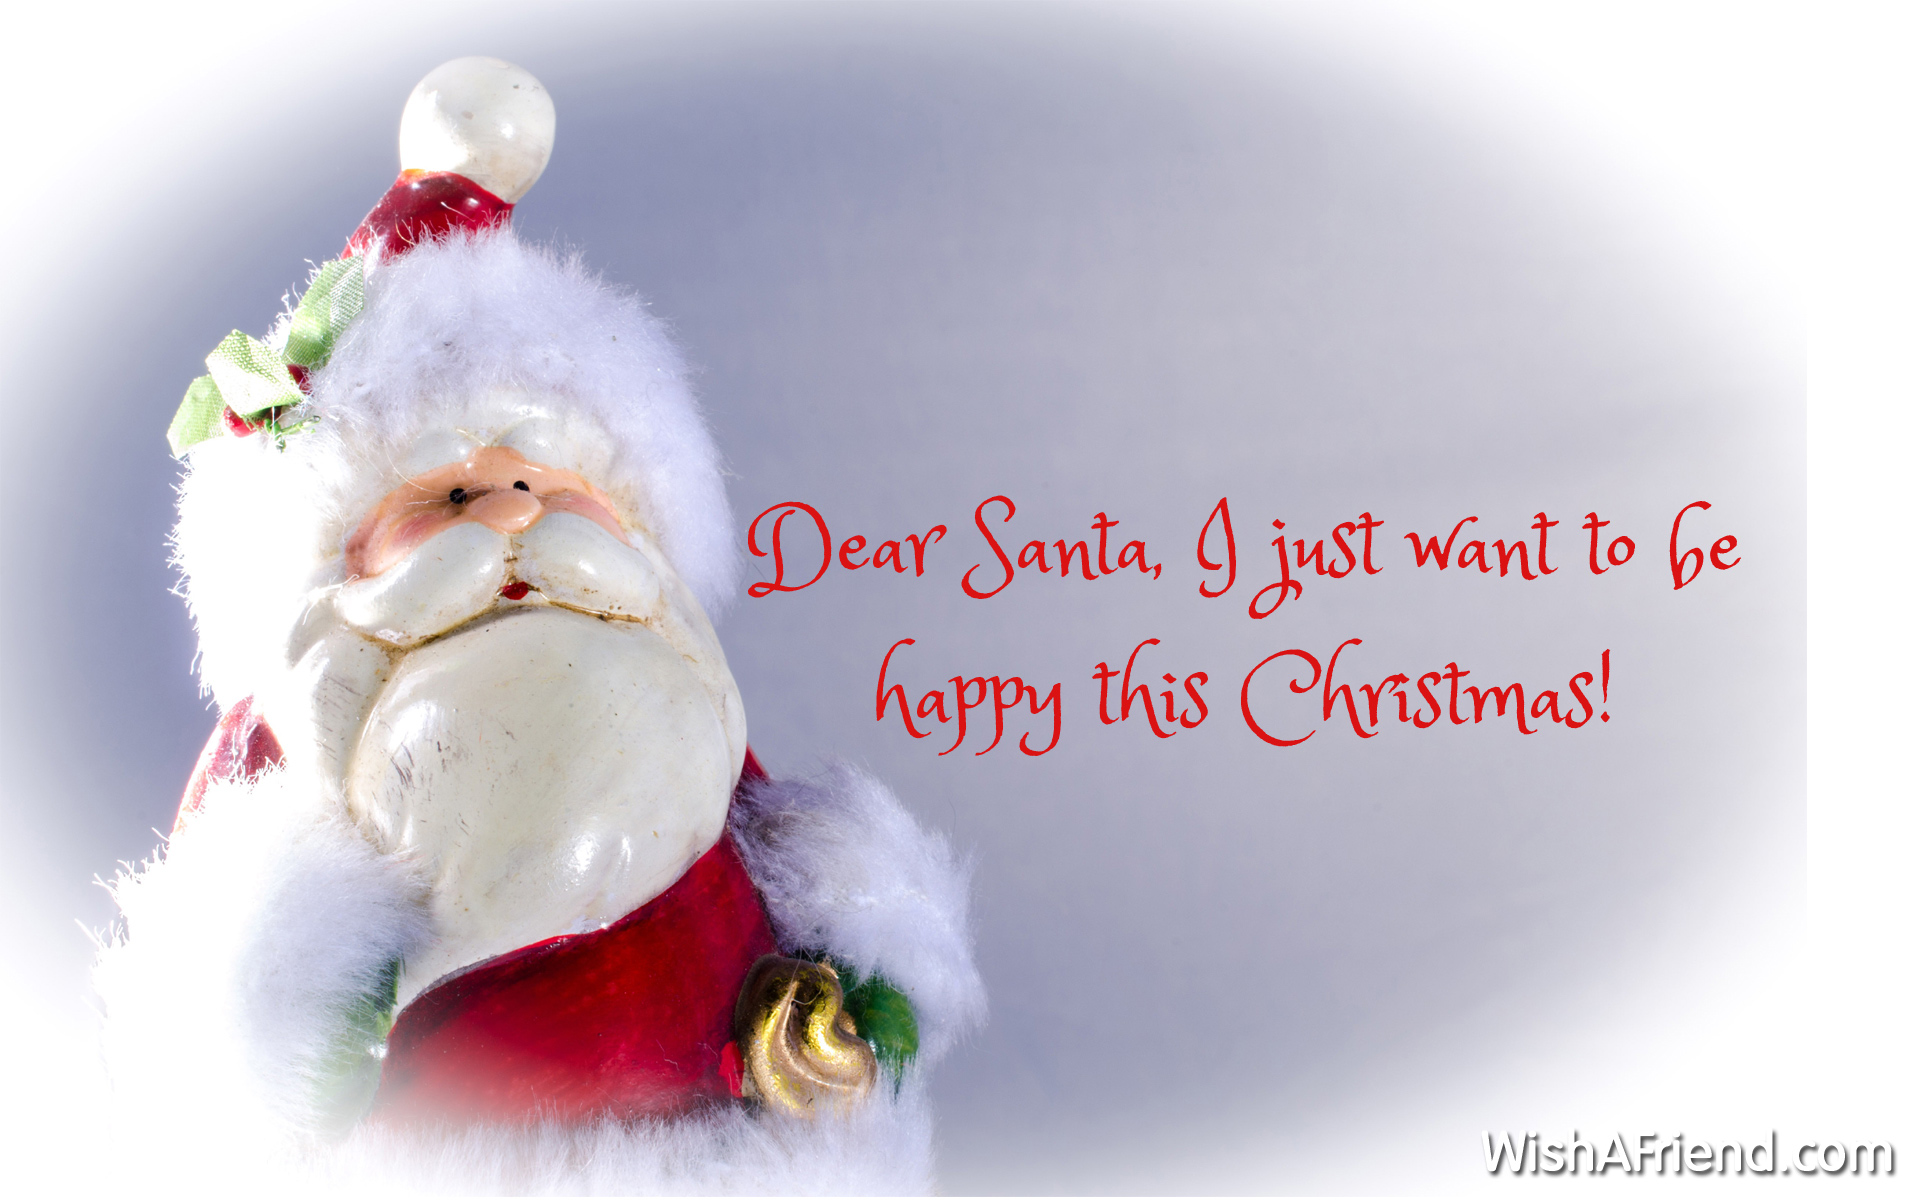 Dear Santa, I just want